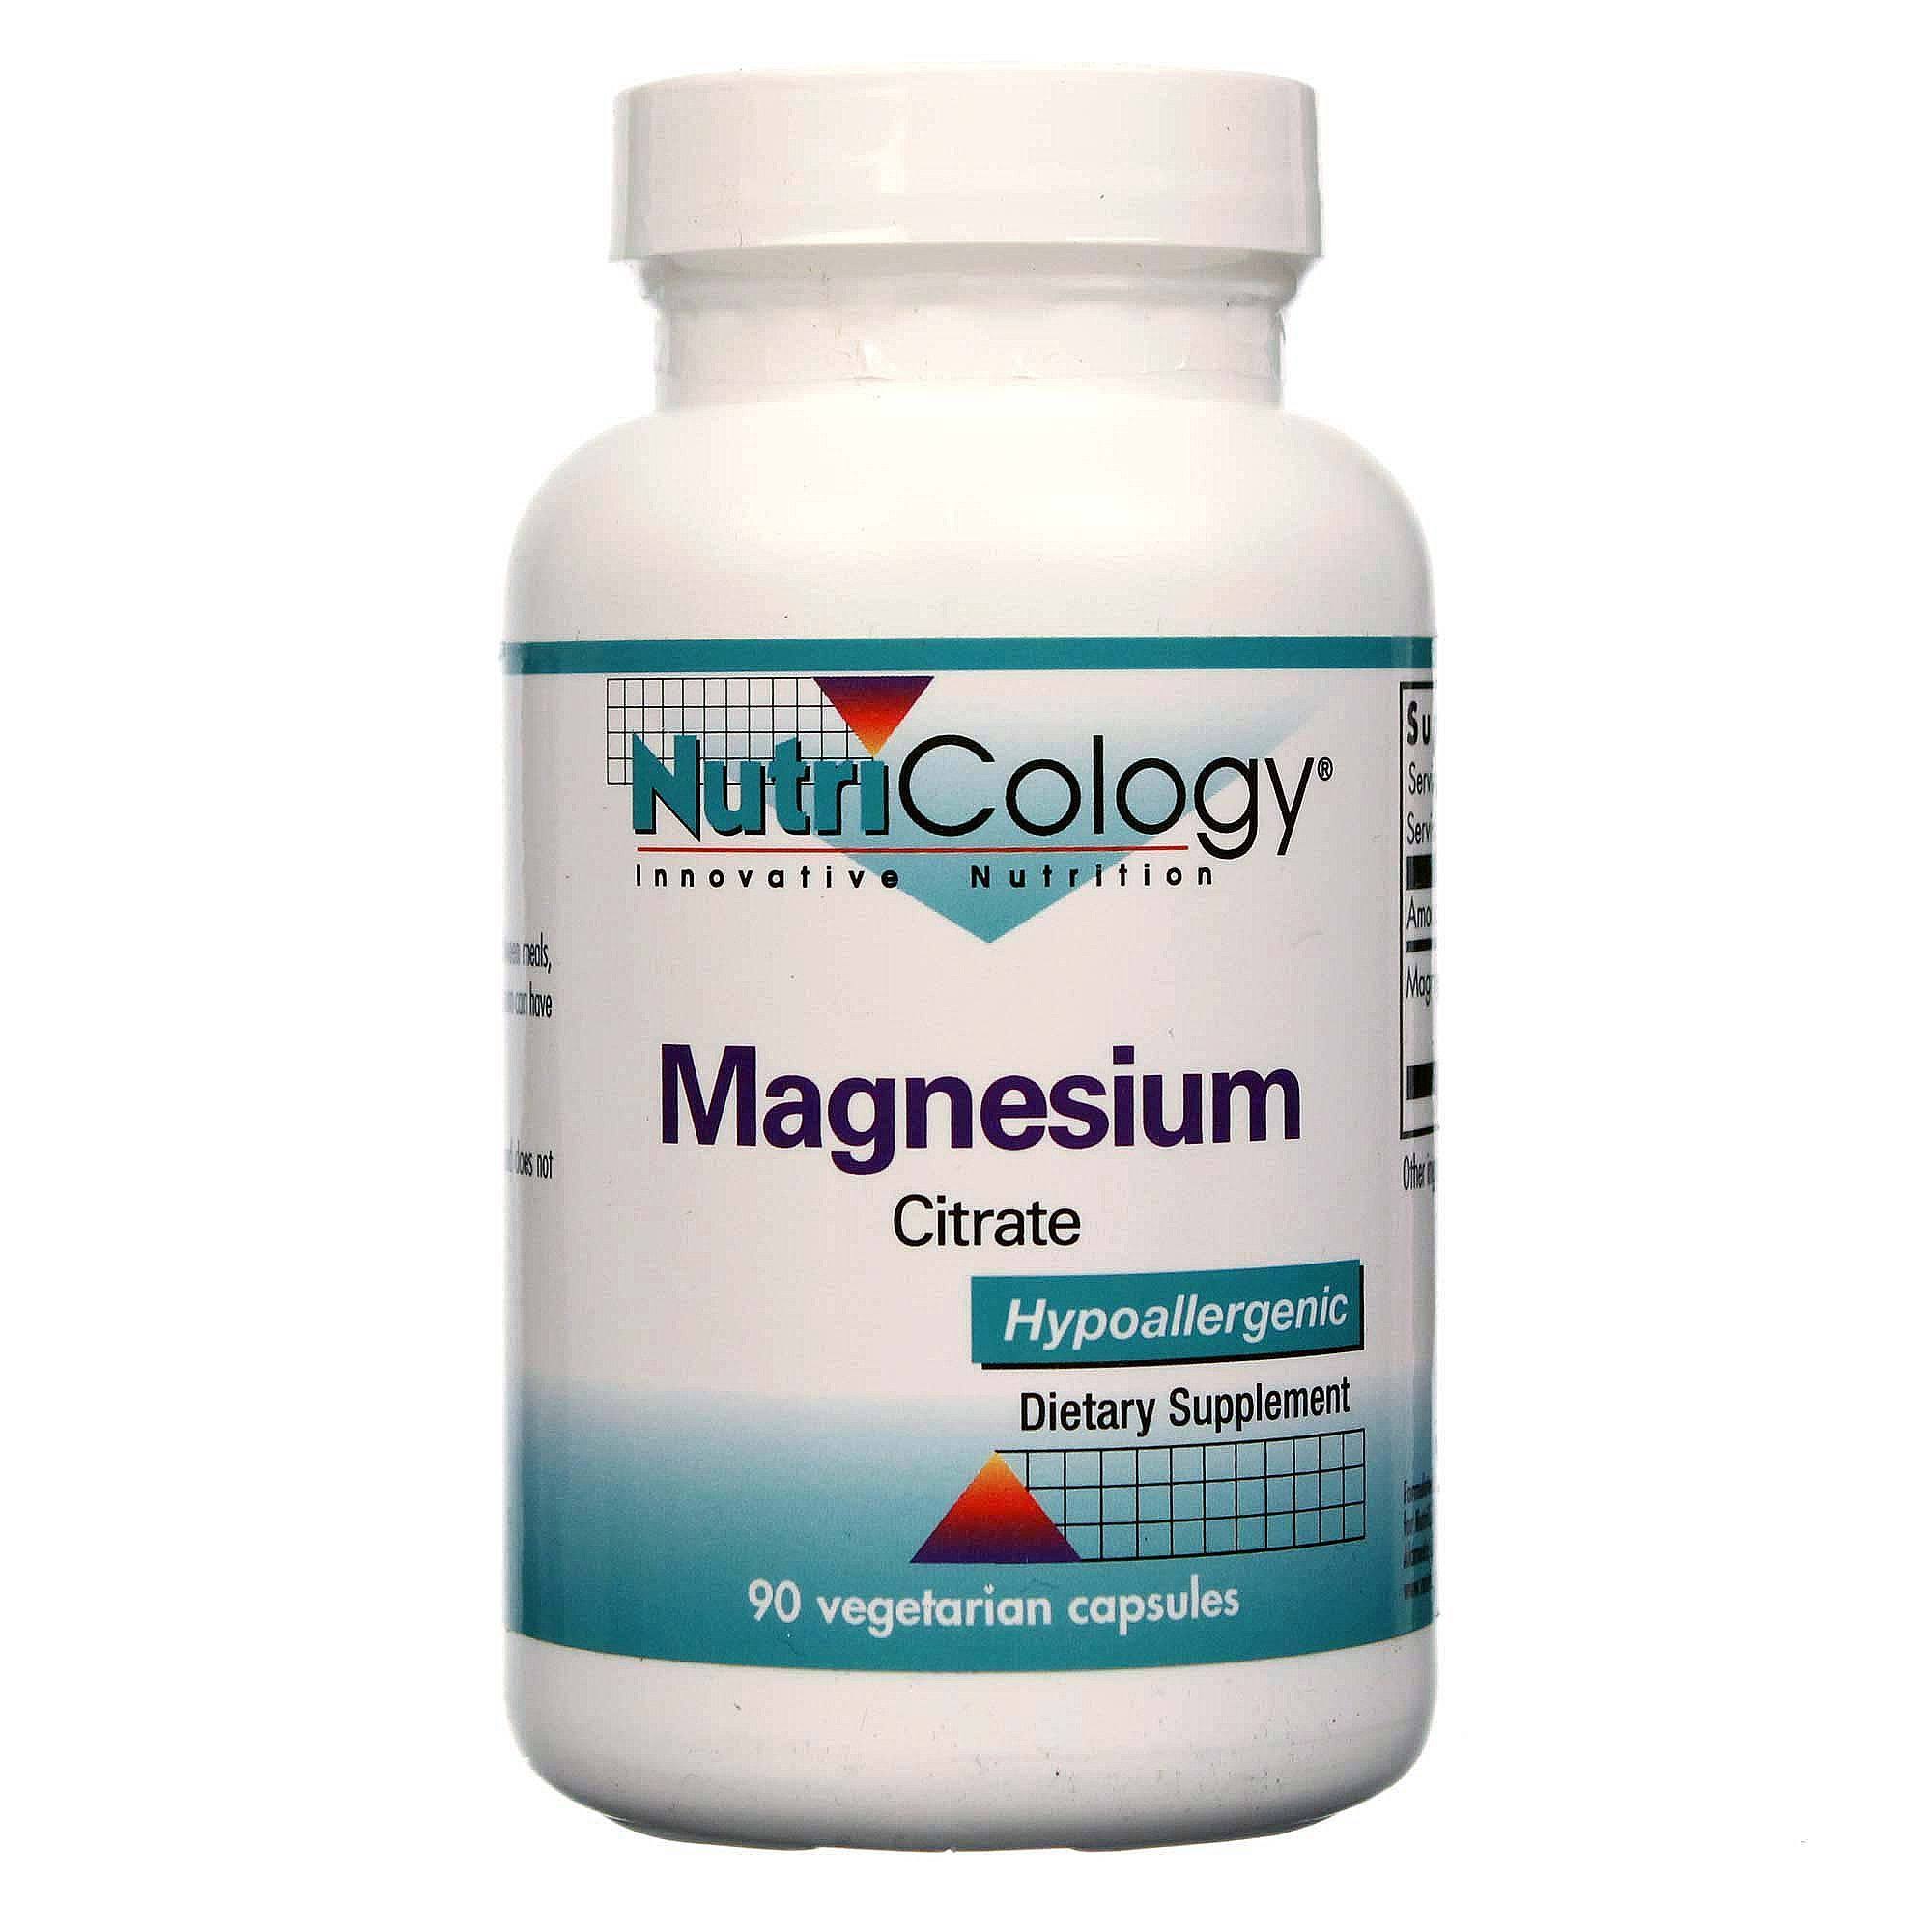 Nutricology Magnesium Citrate 90 Capsules